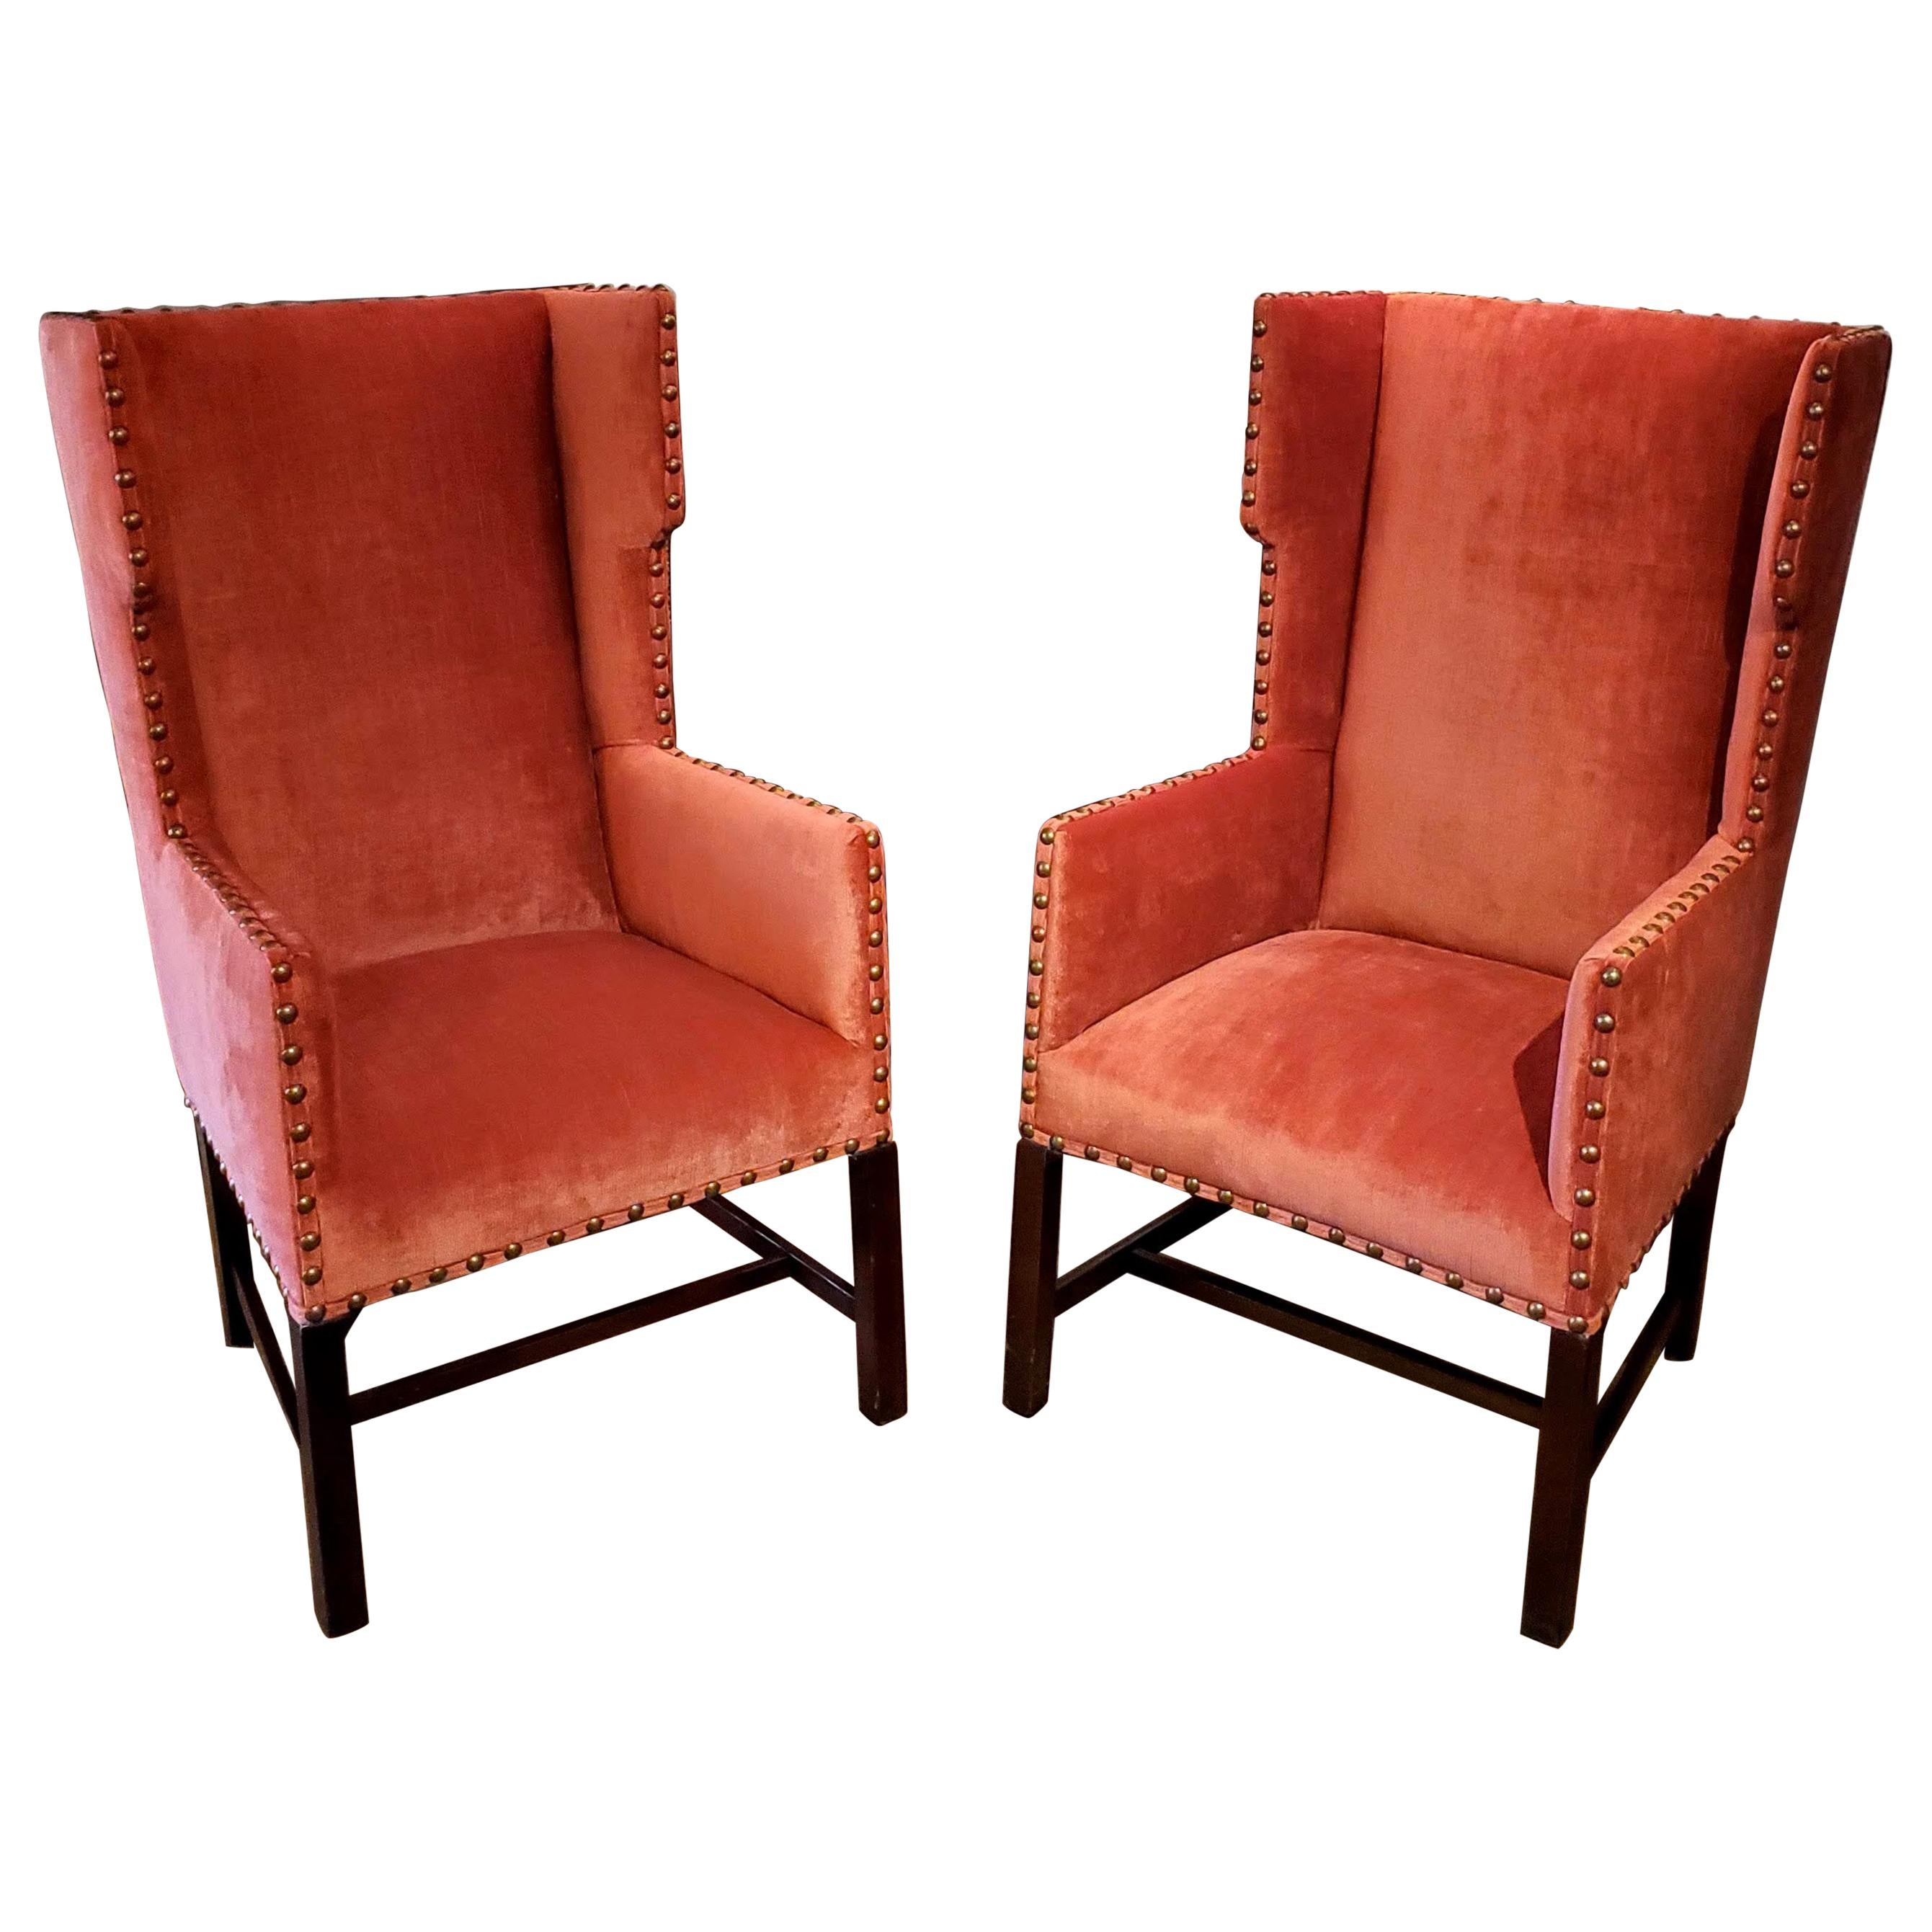 Pair of Elegant 19th Century English Red Velvet Wing Chairs